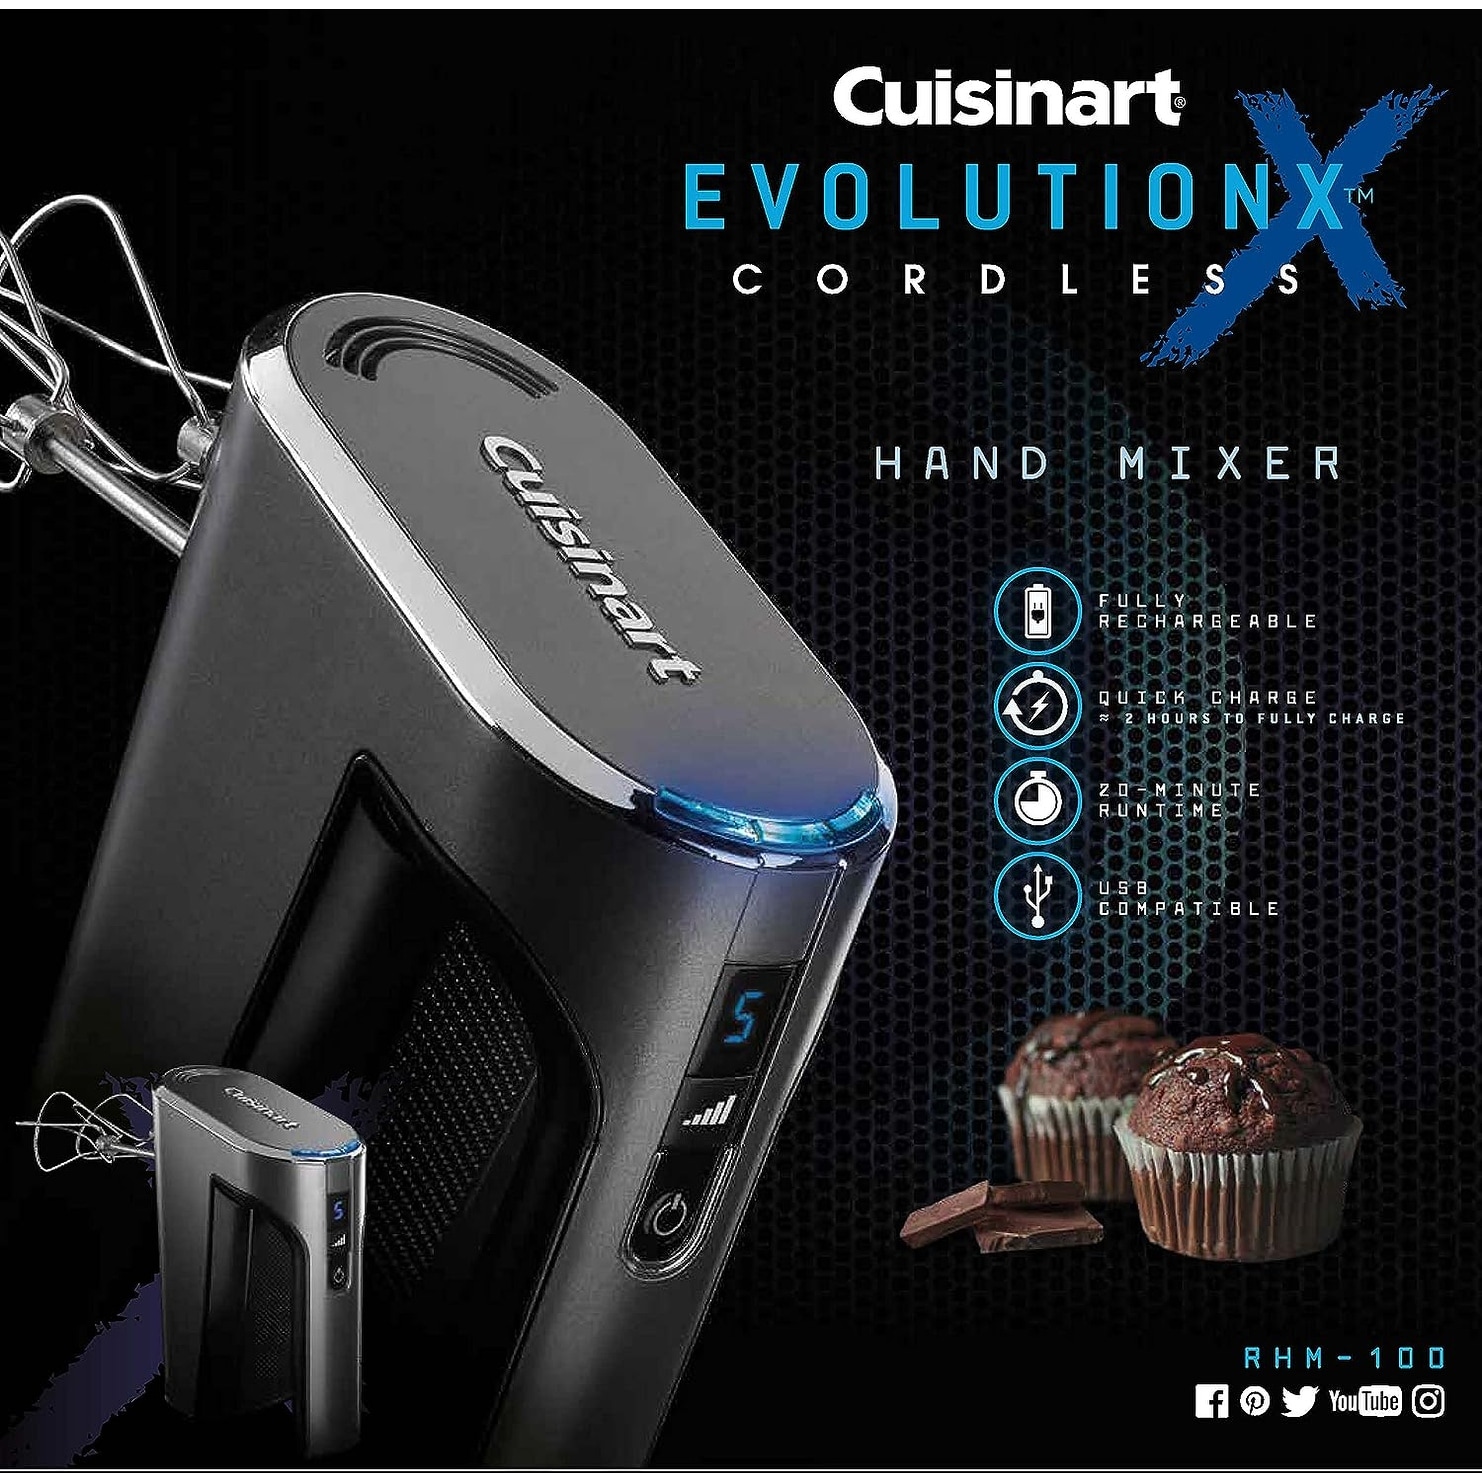 Cuisinart EvolutionX Cordless Rechargeable 5-Speed Hand Mixer